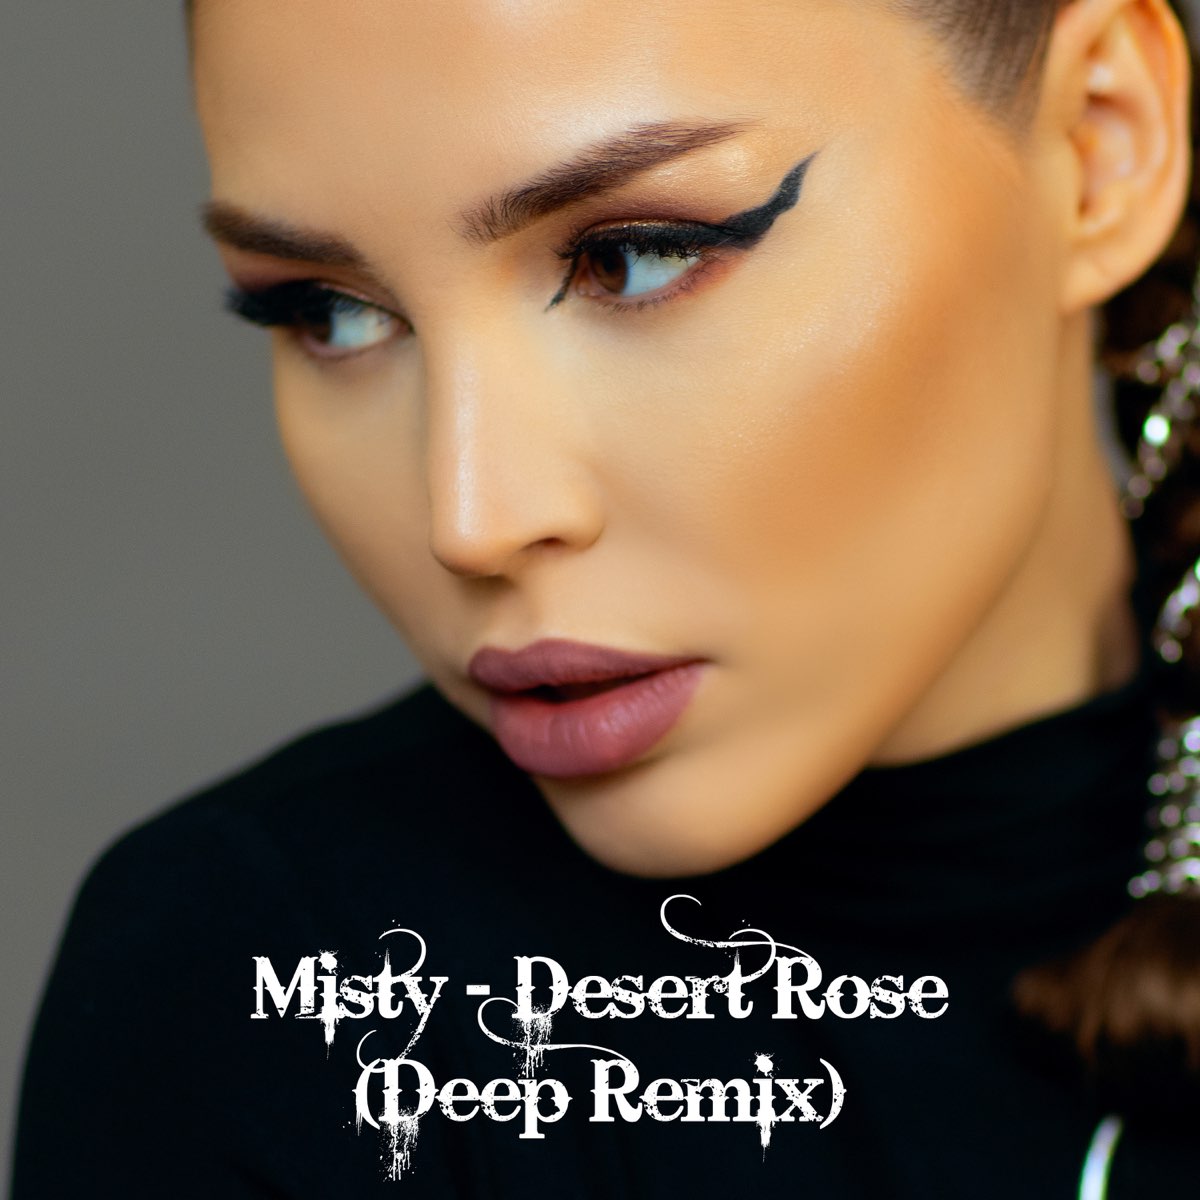 Deep remix mp3. Мисти десерт Роуз. Desert Rose Мисти. Desert Rose Remix. Desert Rose ремикс.